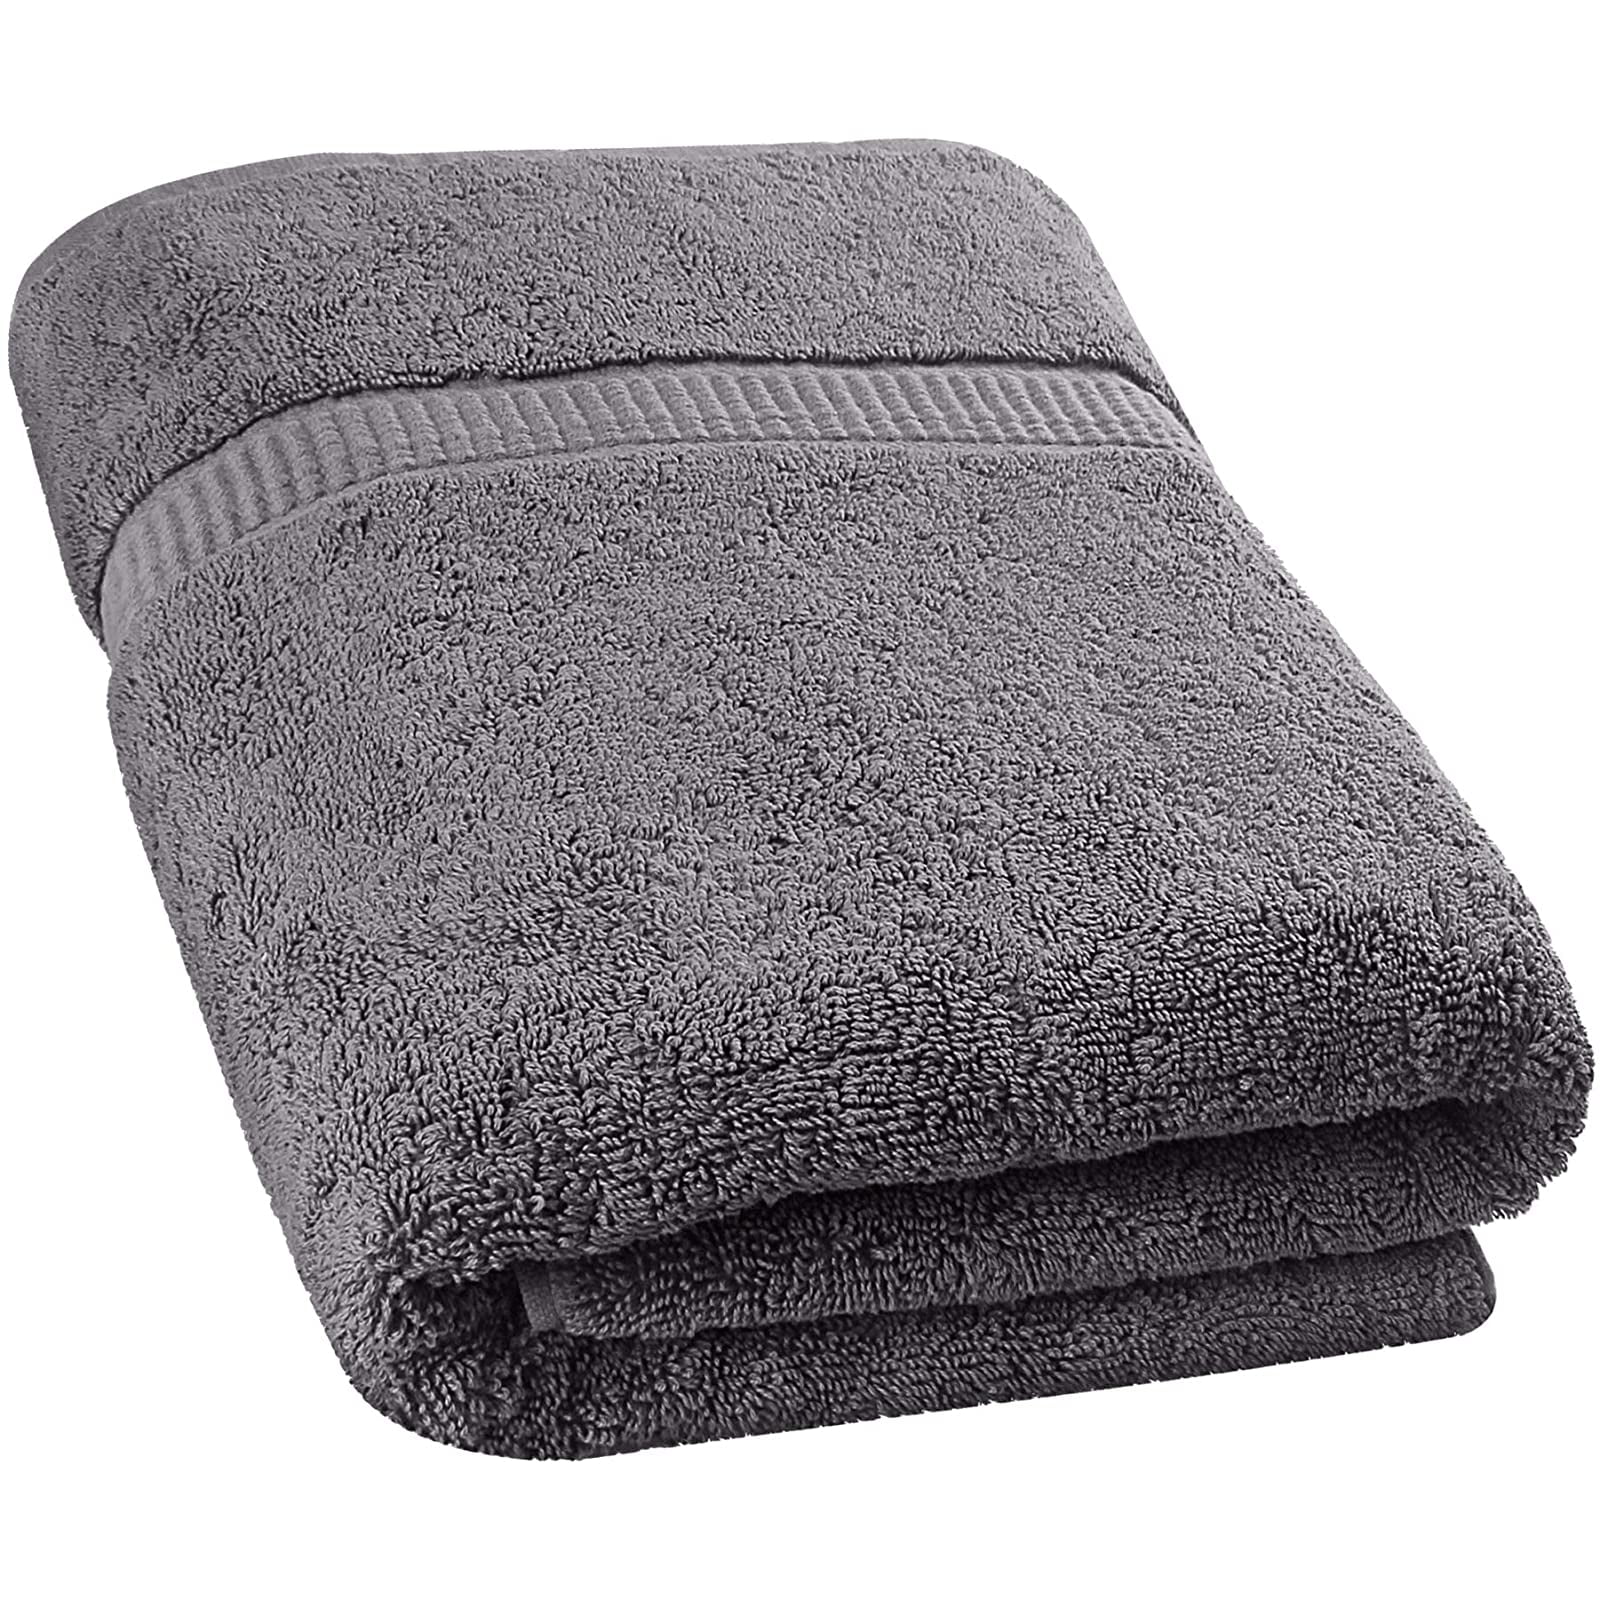 Charcoal, 1 Rasmi 2x Super Jumbo Bath Sheet 100% Egyptian Combed Cotton Extra Large Bath Sheet Towel 100x200 cm 600 GSM 